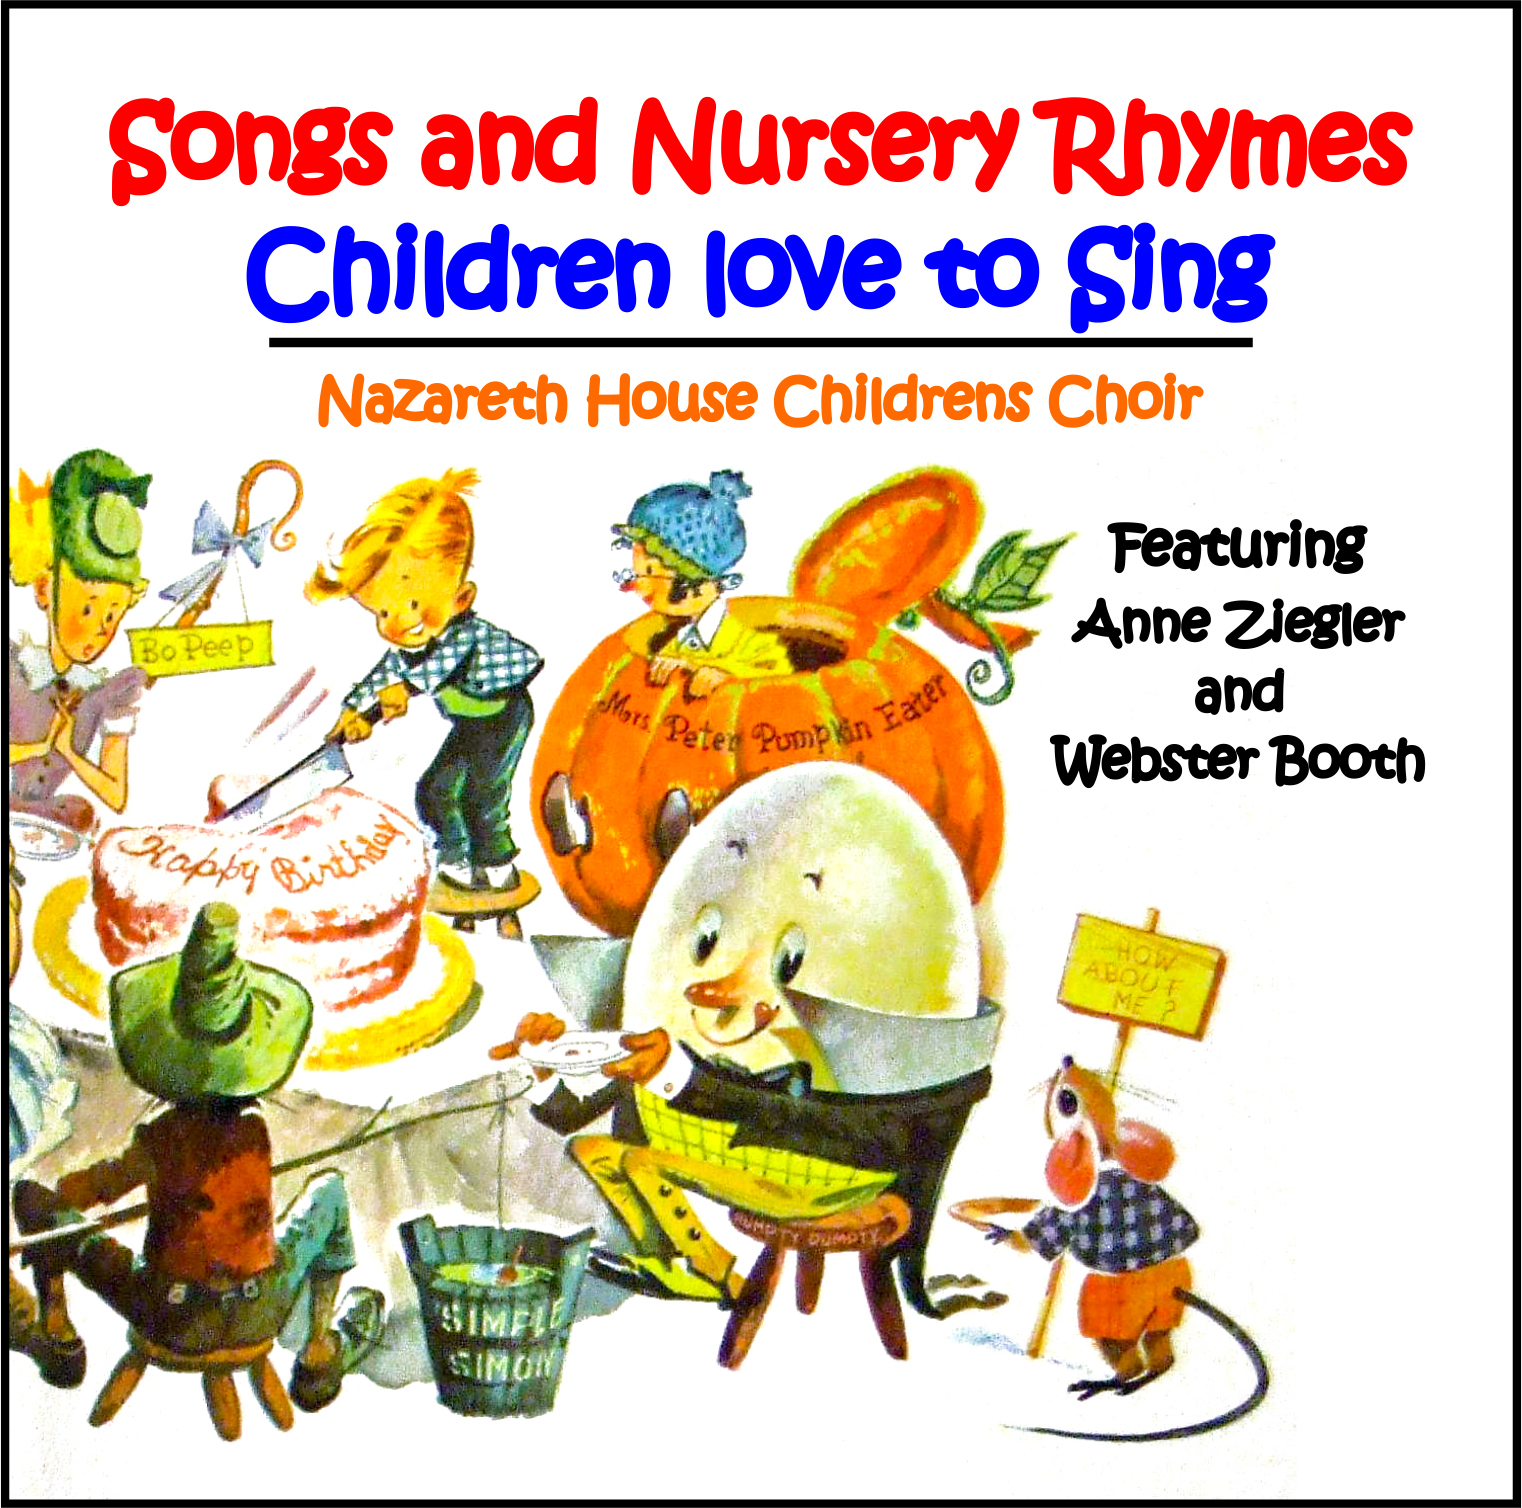 Songs and Nursery Rhymes Children Love to Sing